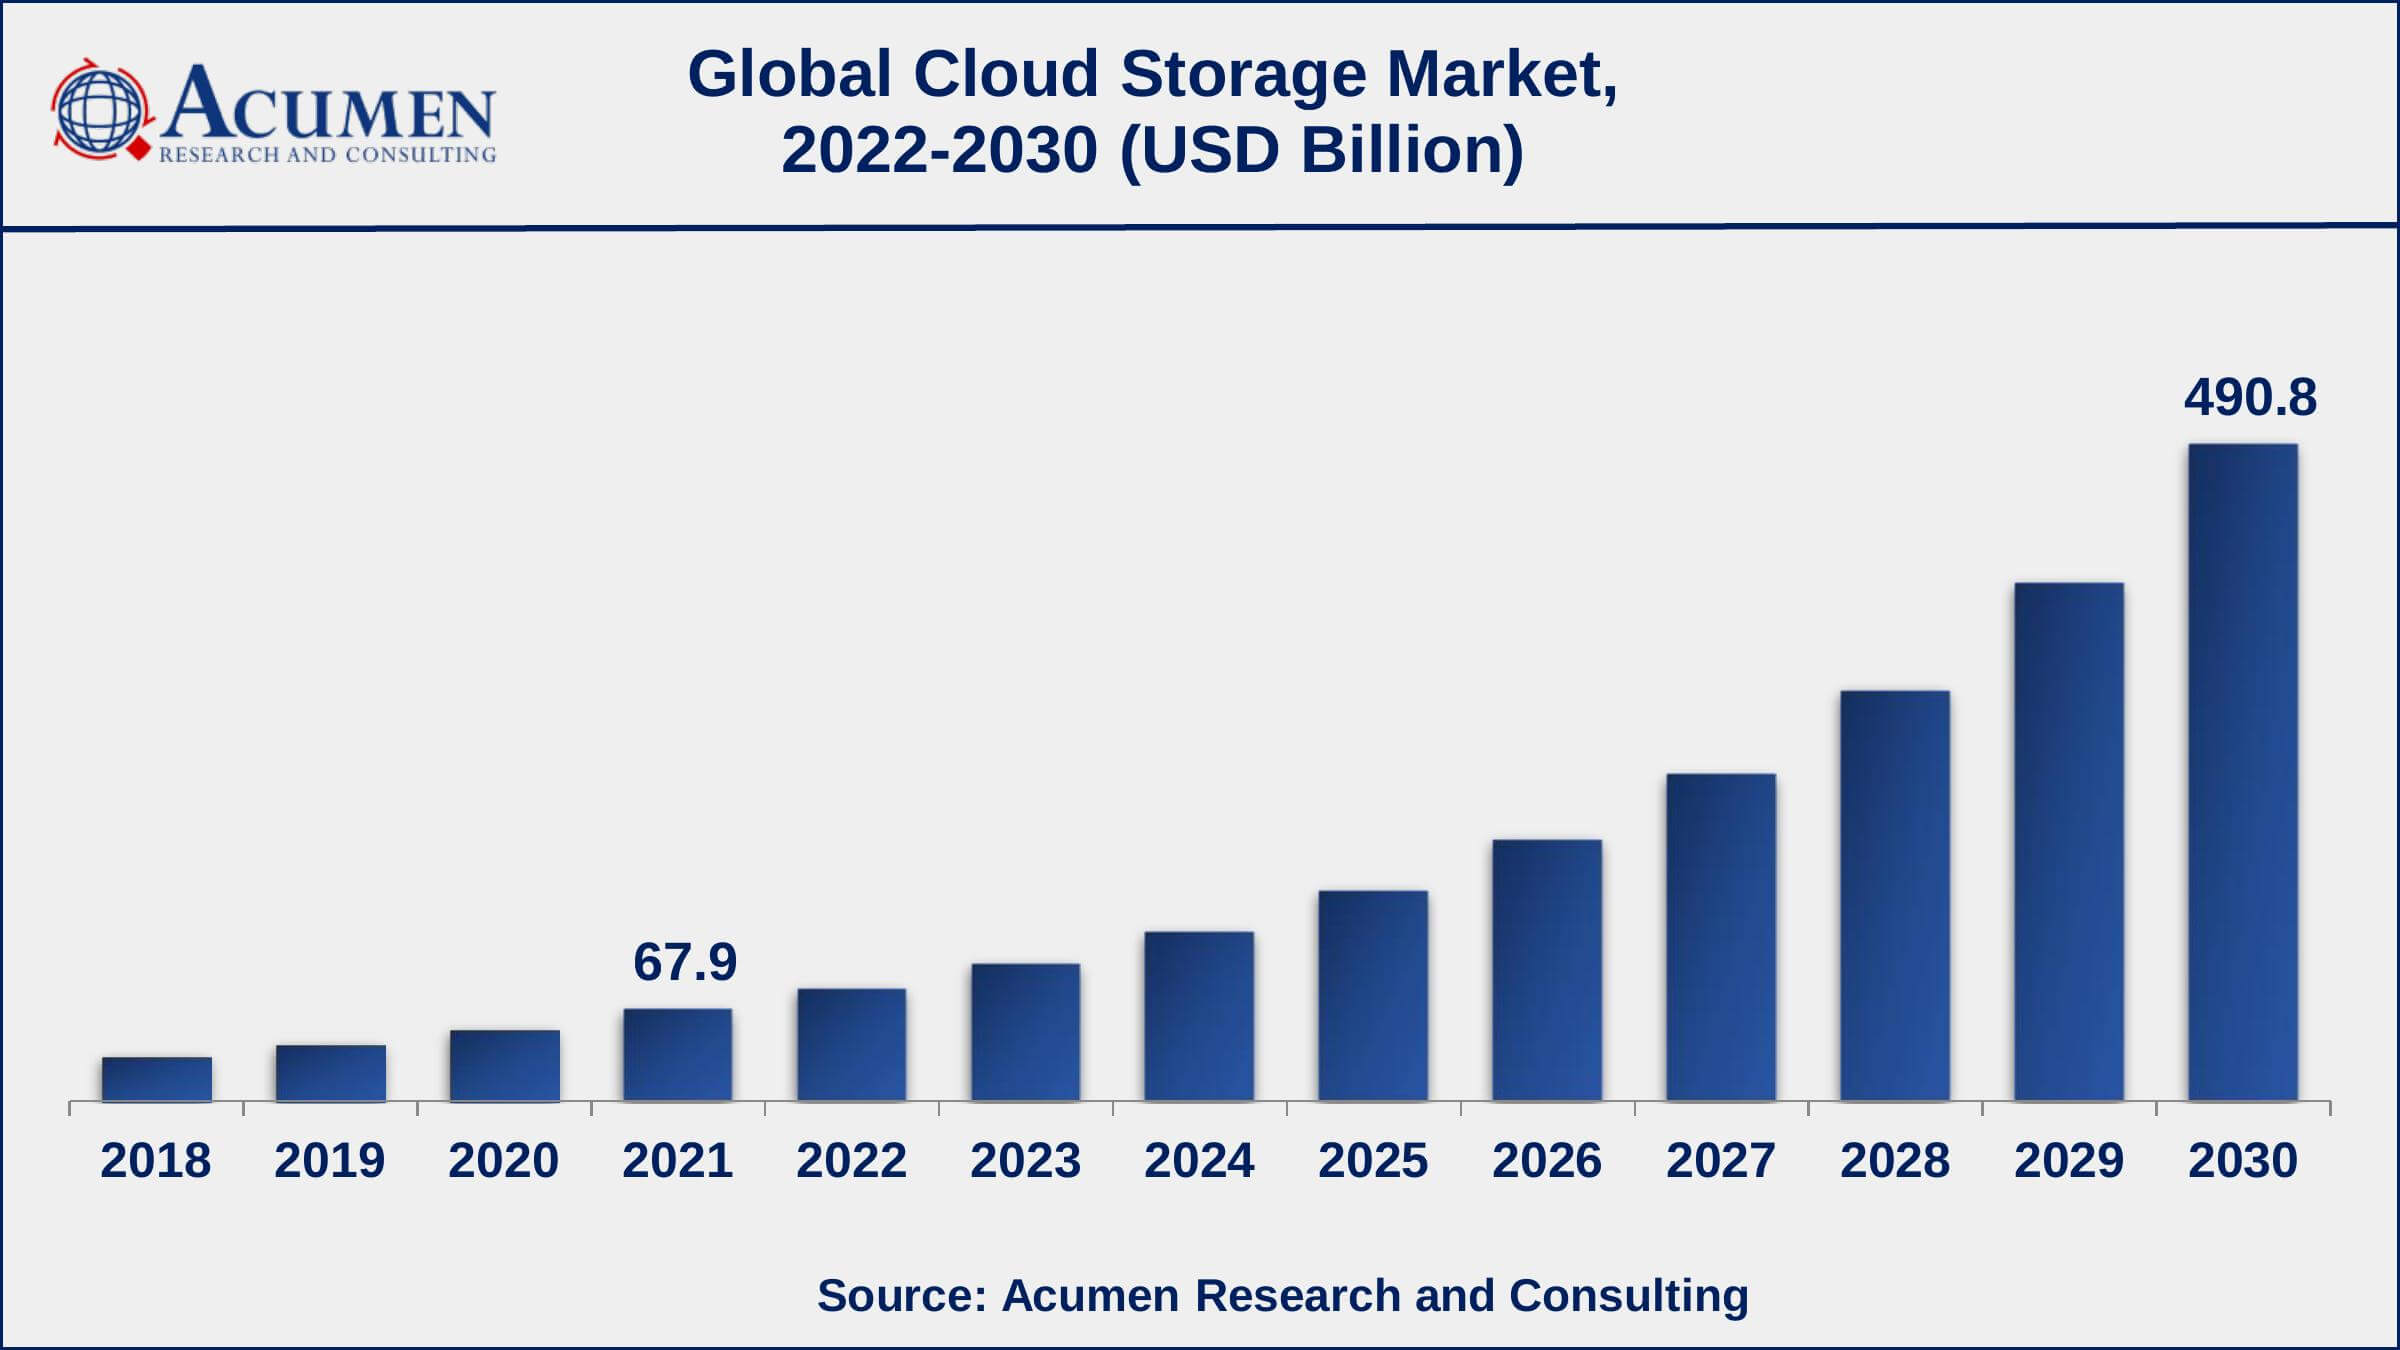 Global Cloud Storage Market Dynamics